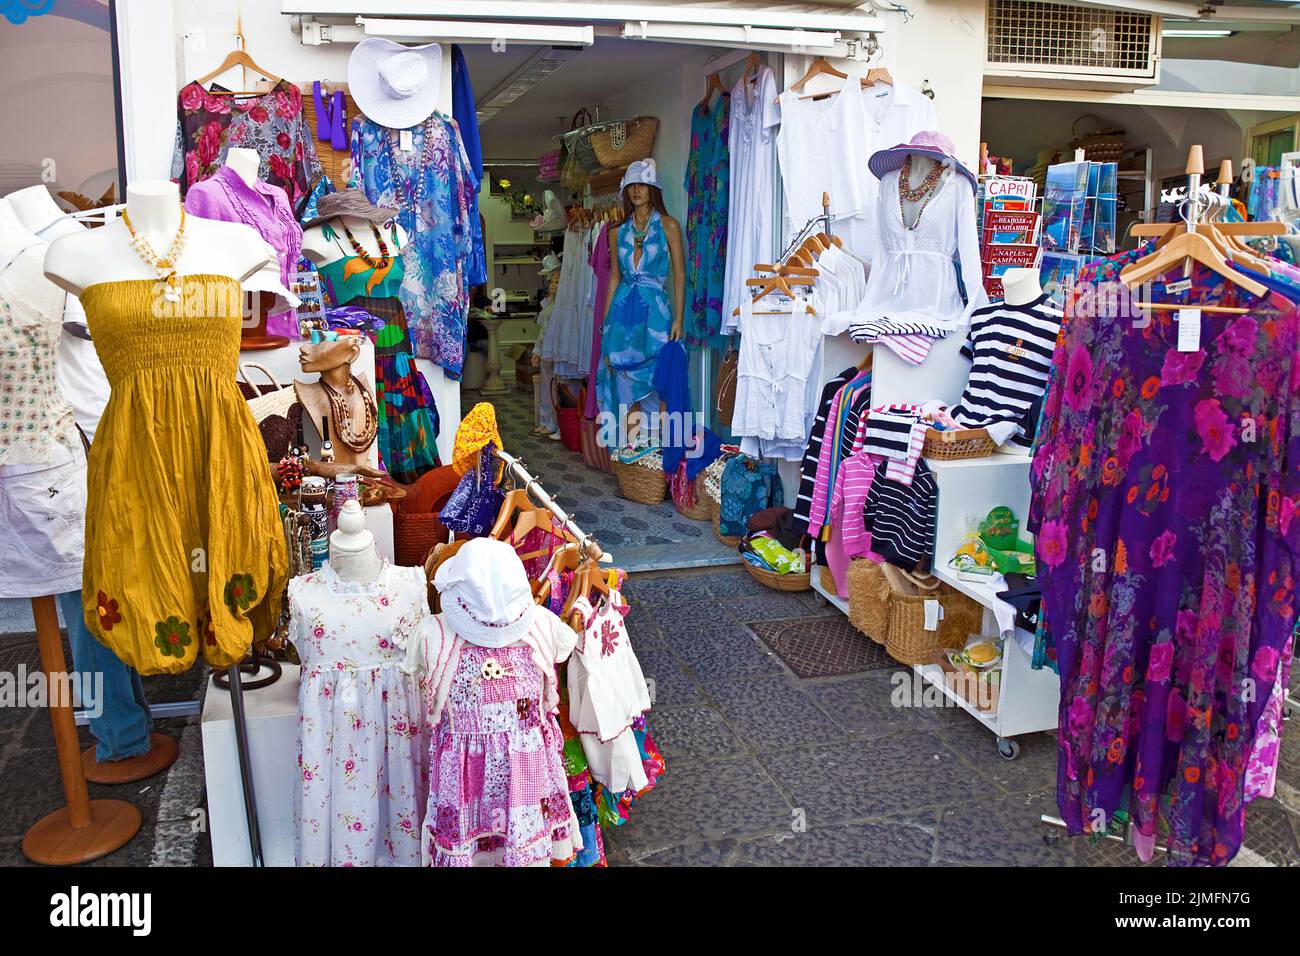 Modegeschaft, Caprimode an der Hafenpromenade von Marina Grande, Insel Capri, Golf von Neapel, Kampanien, Italien, Europa | Boutique de mode au harbo Banque D'Images